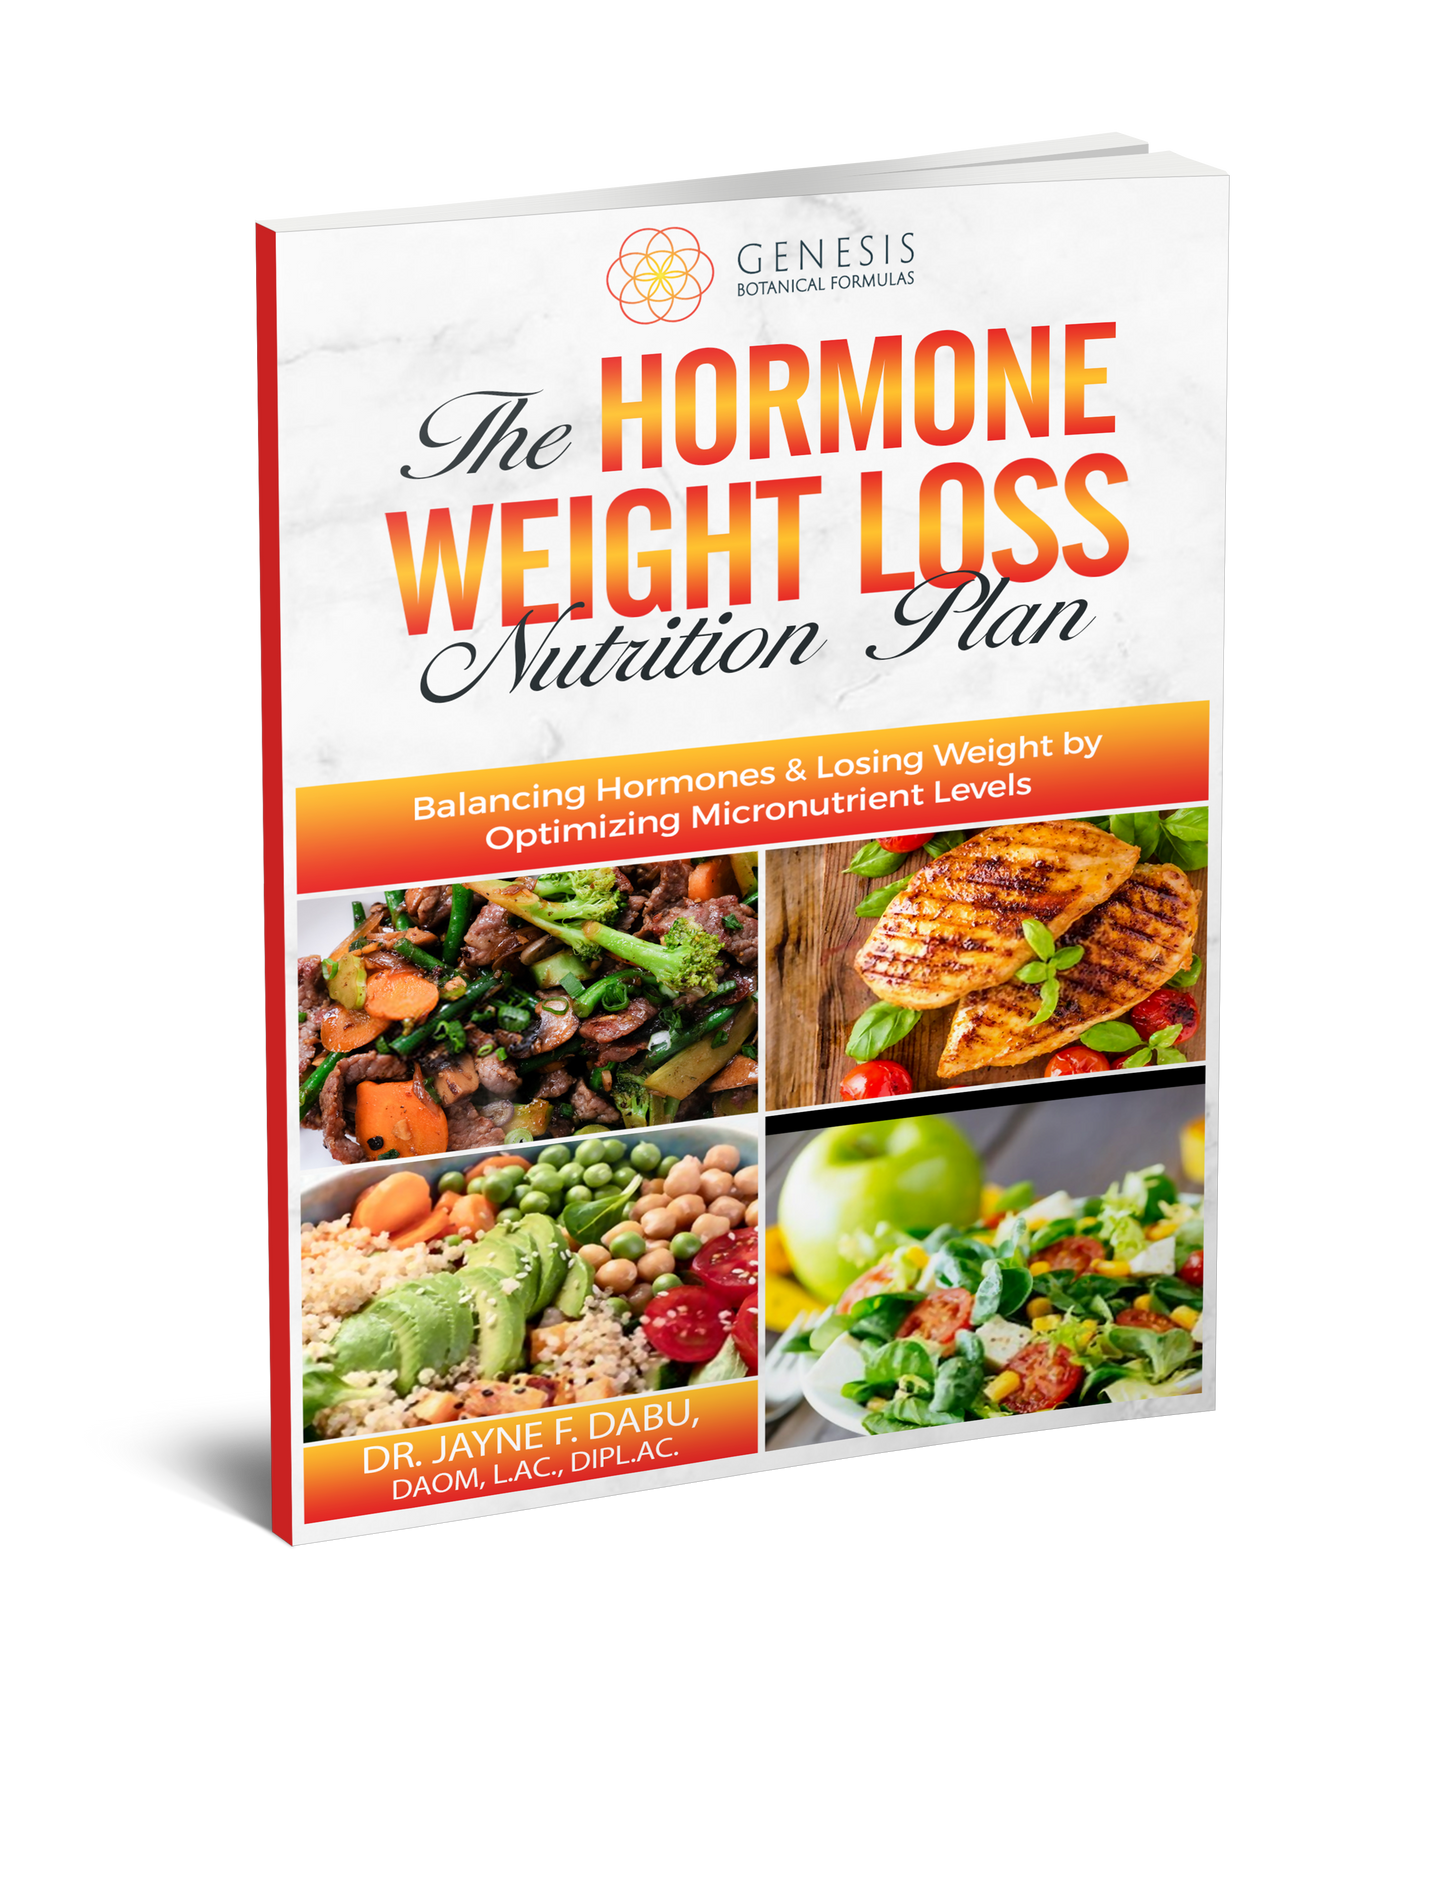 Genesis Male Hormone Weight Loss Program